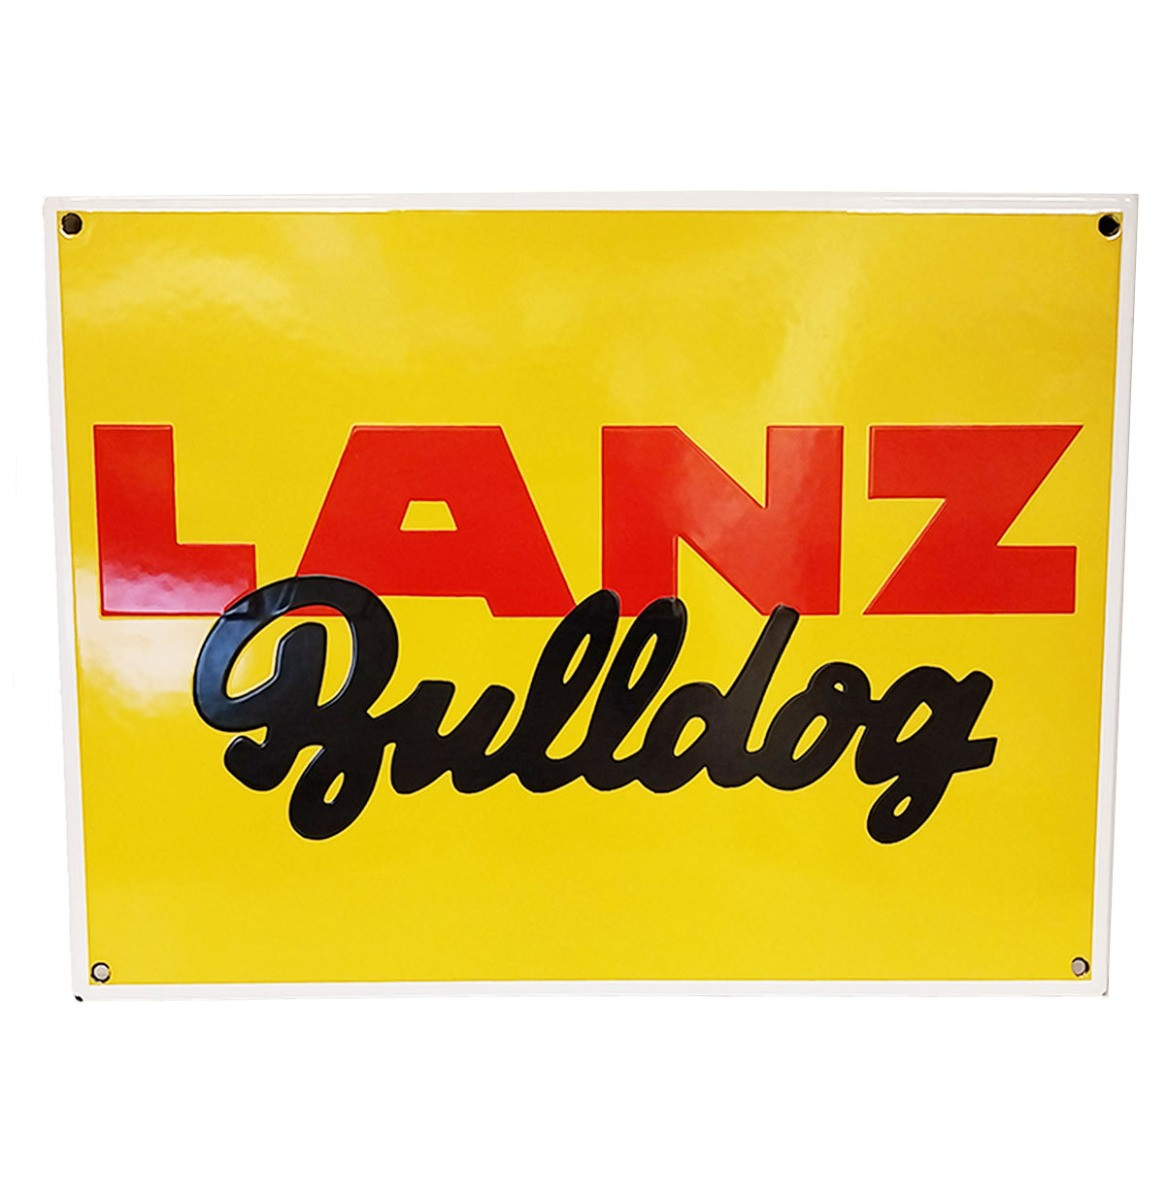 Lanz Bulldog Emaille Bord - 40 x 30cm